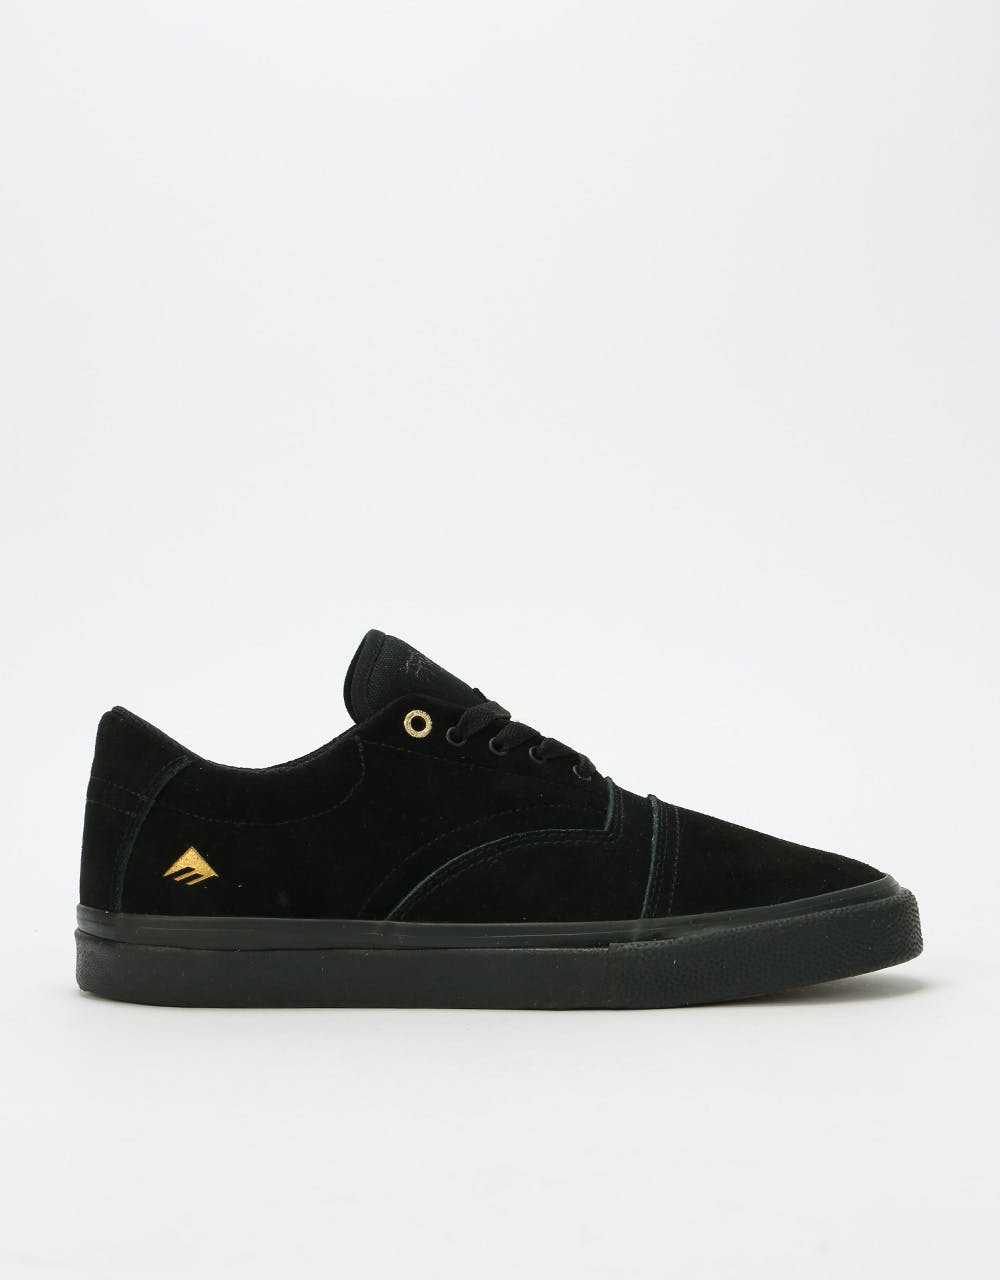 Emerica Provider Skate Shoes - Black/Black/Gum